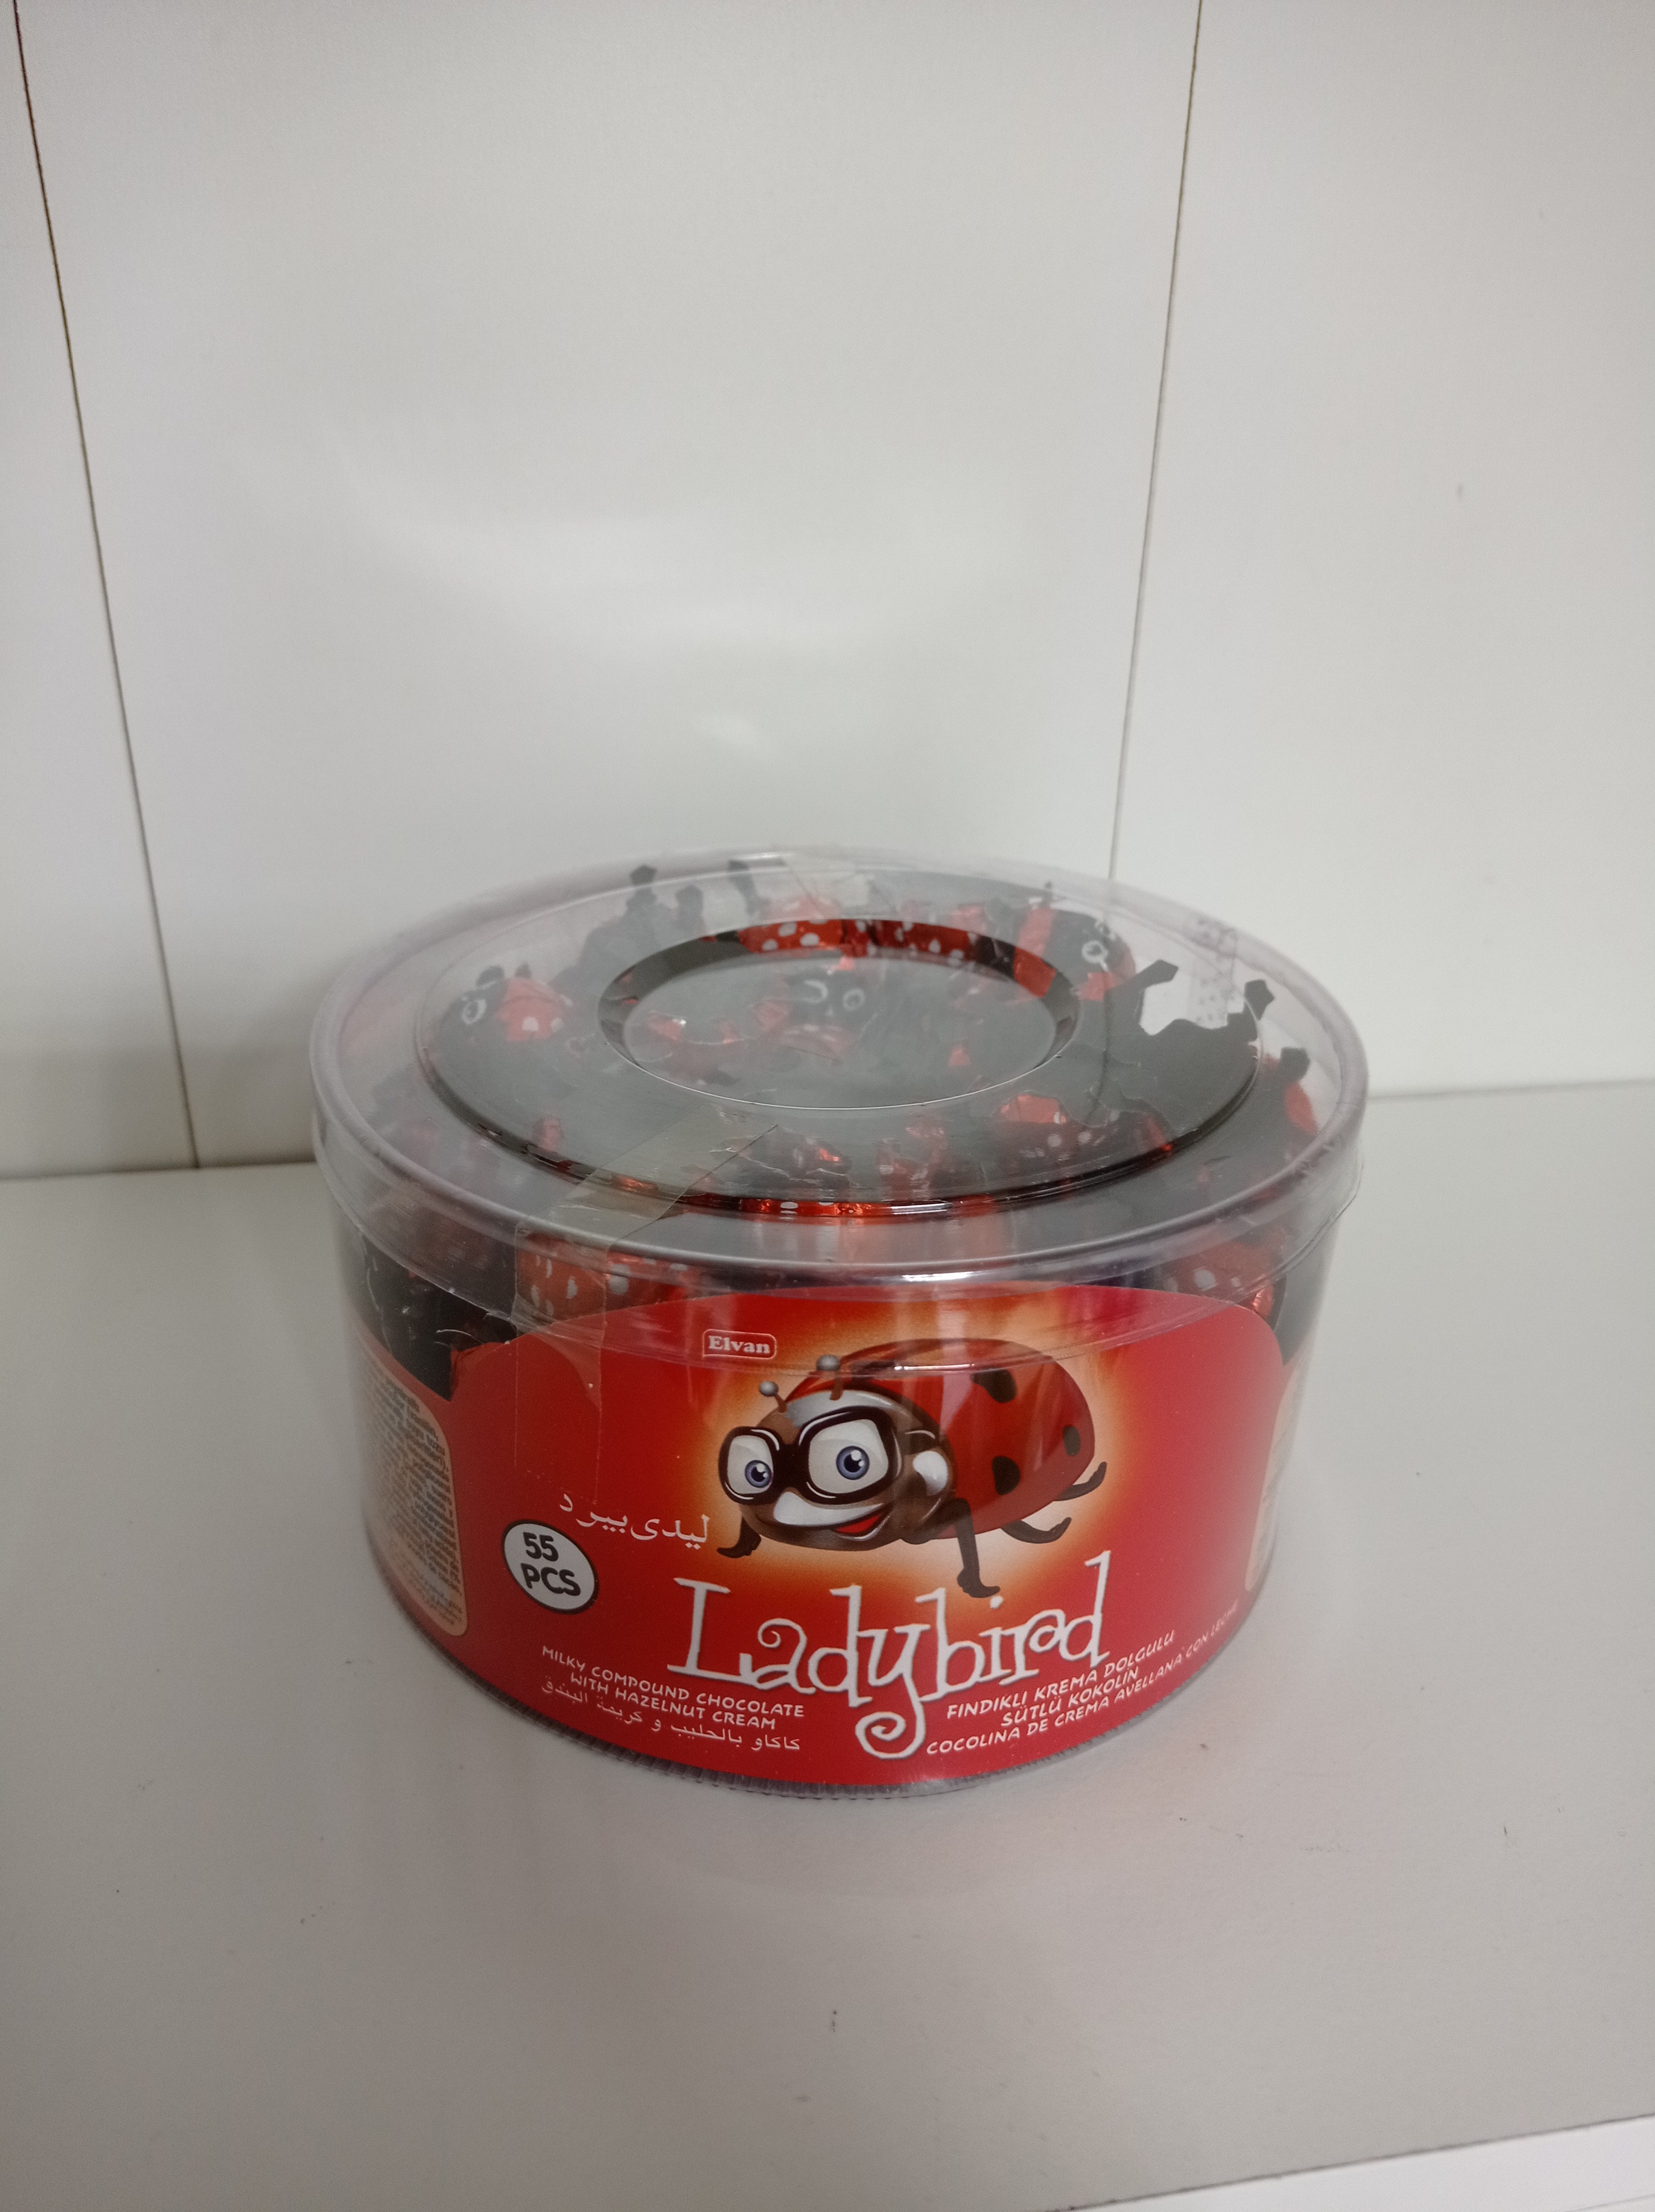 (Food) 55 Pcs Pack Ladybird (55PcsX8G)